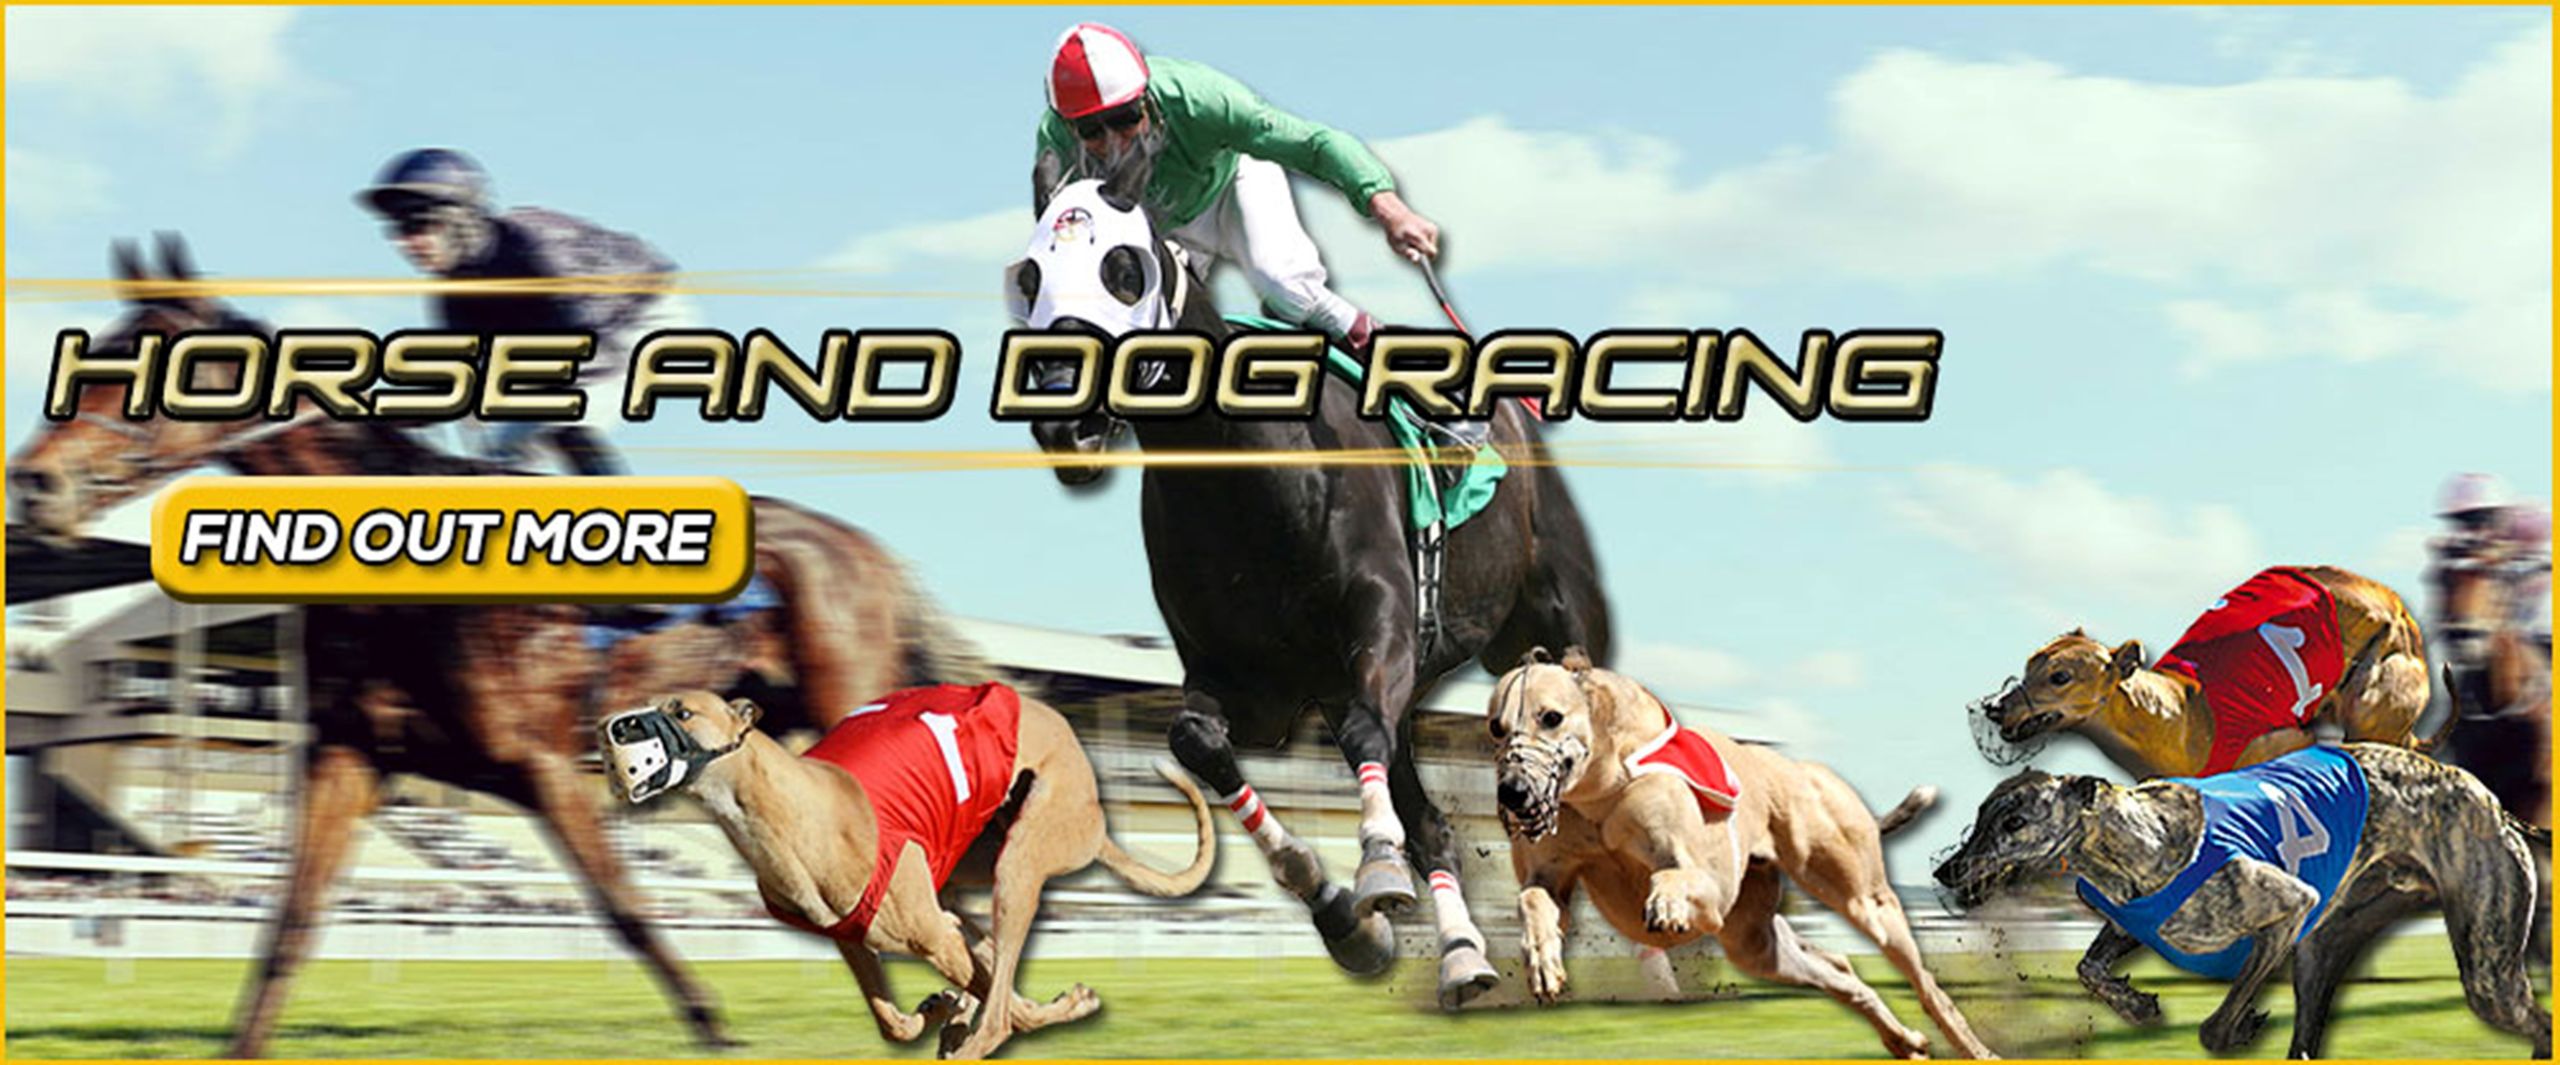 Dog Race Betting Online Singapore